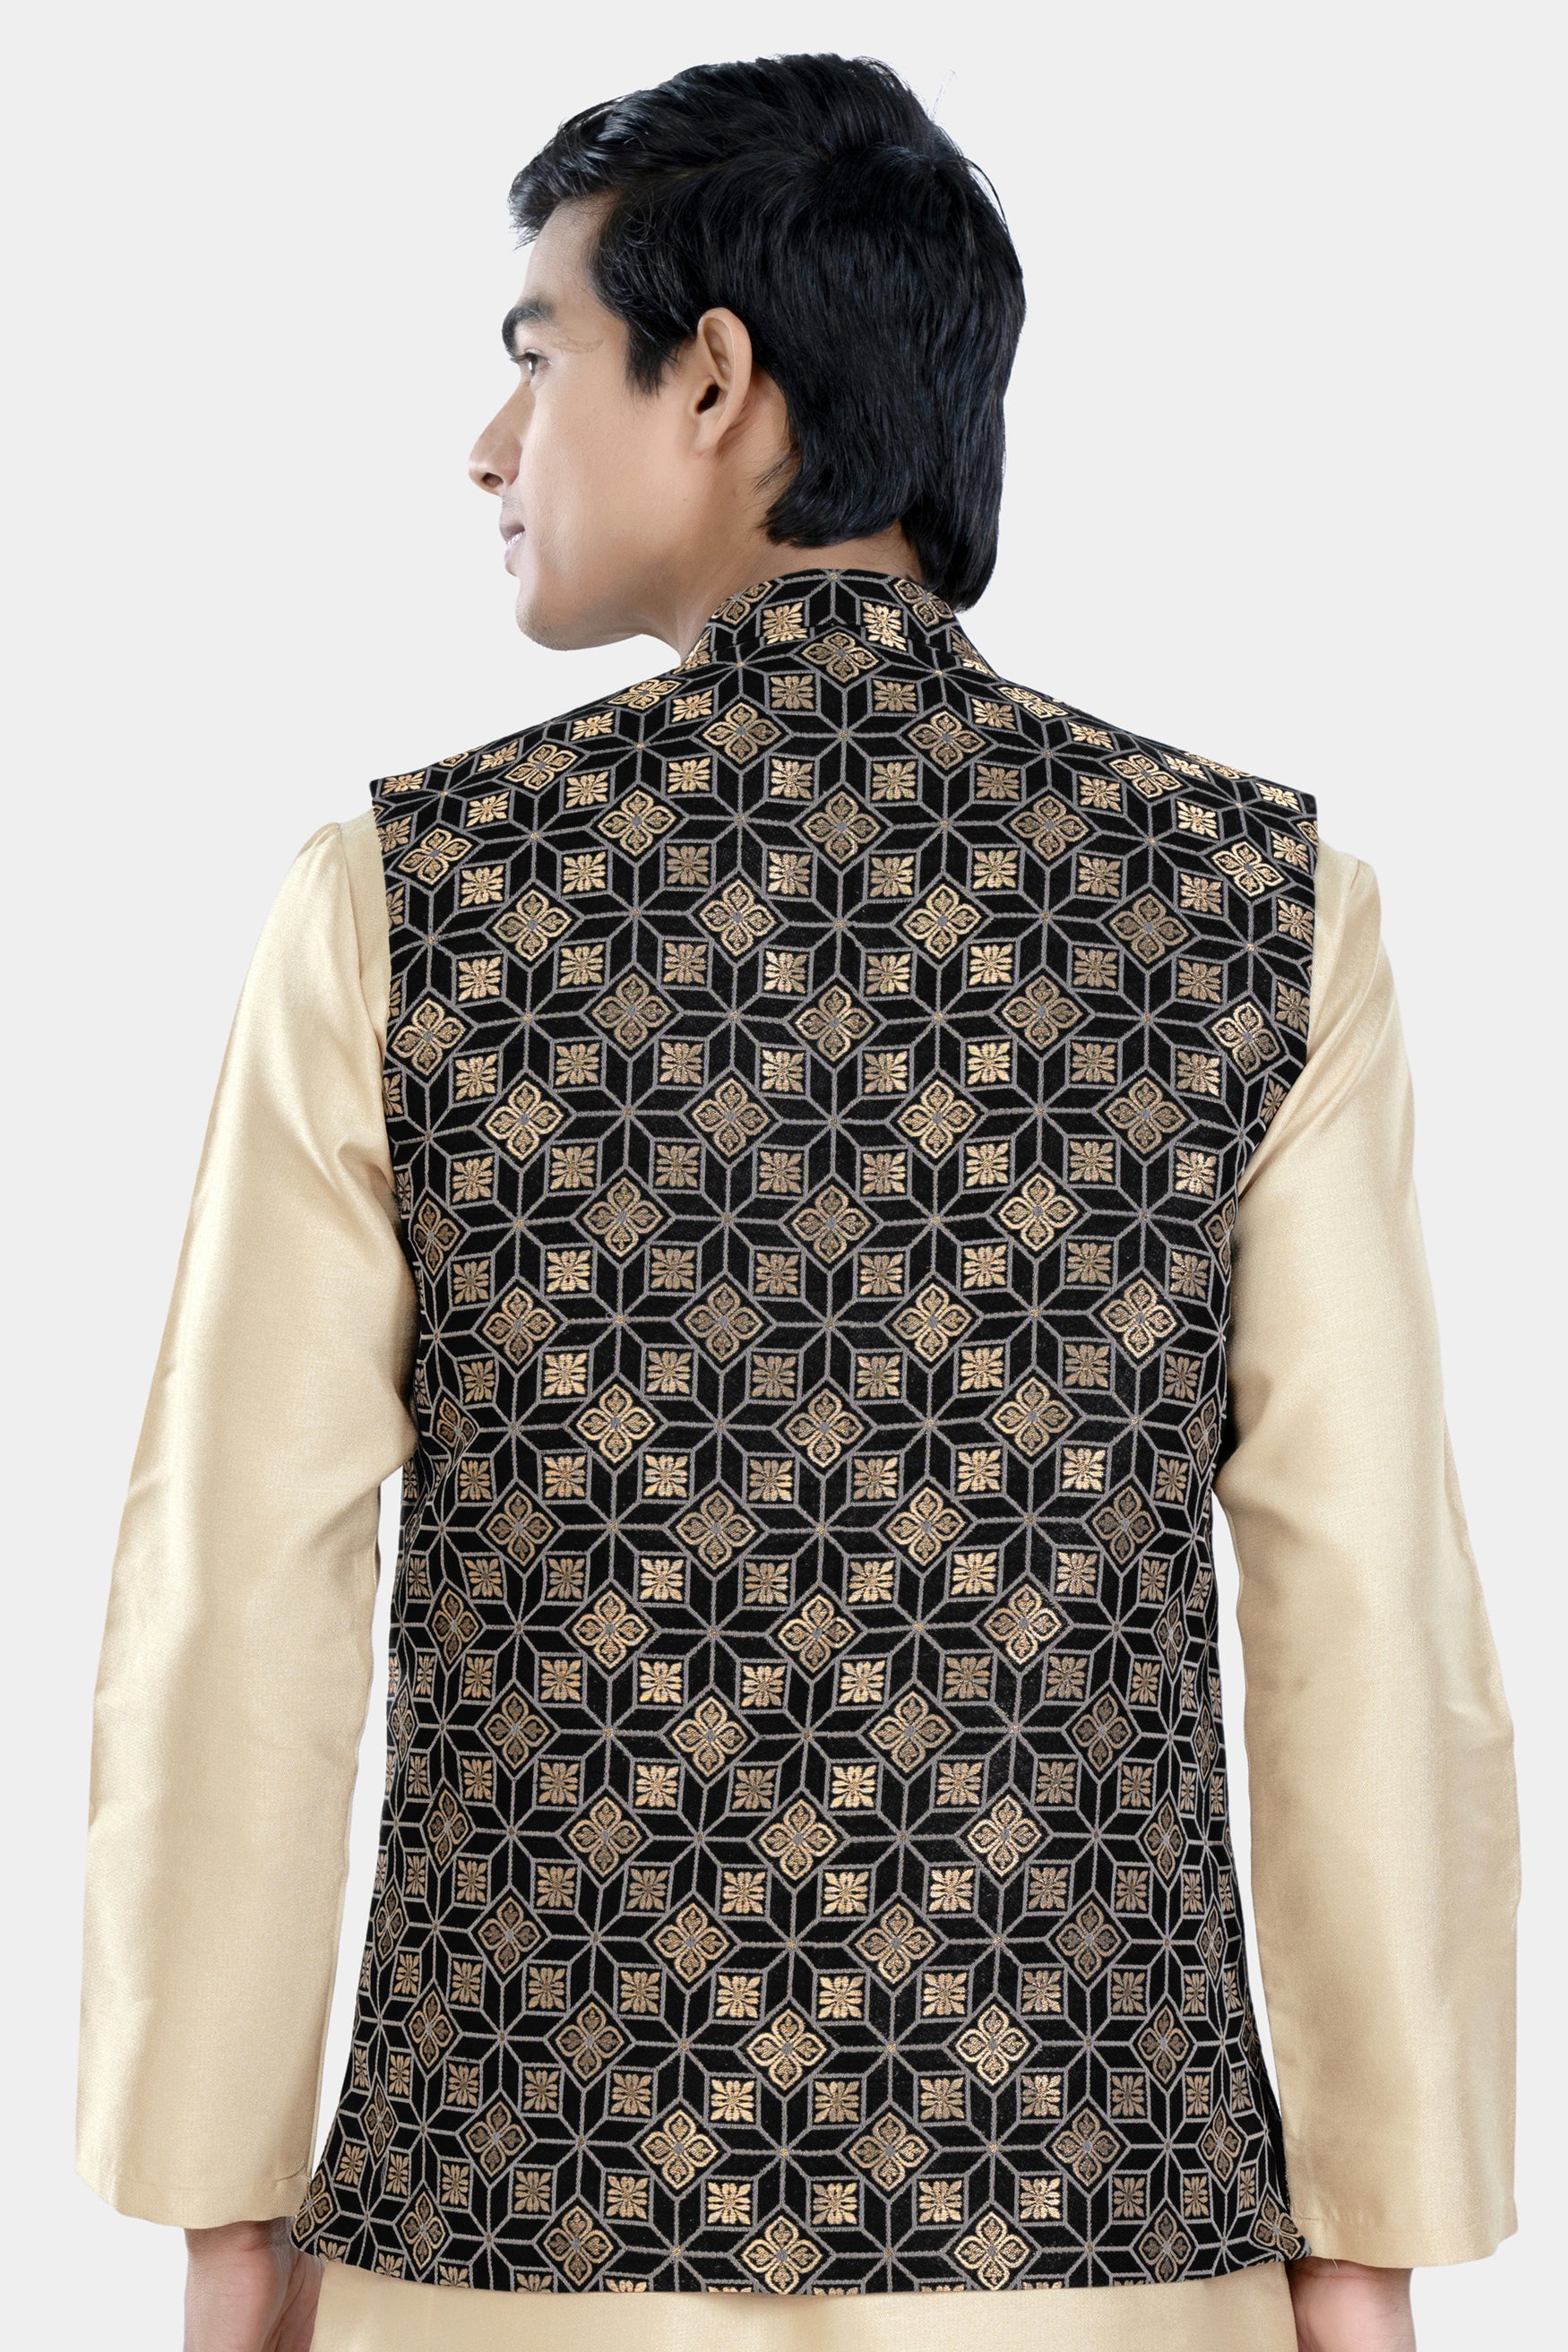 Cinder Black and Tan Brown Geometric Jacquard Textured Designer Nehru Jacket